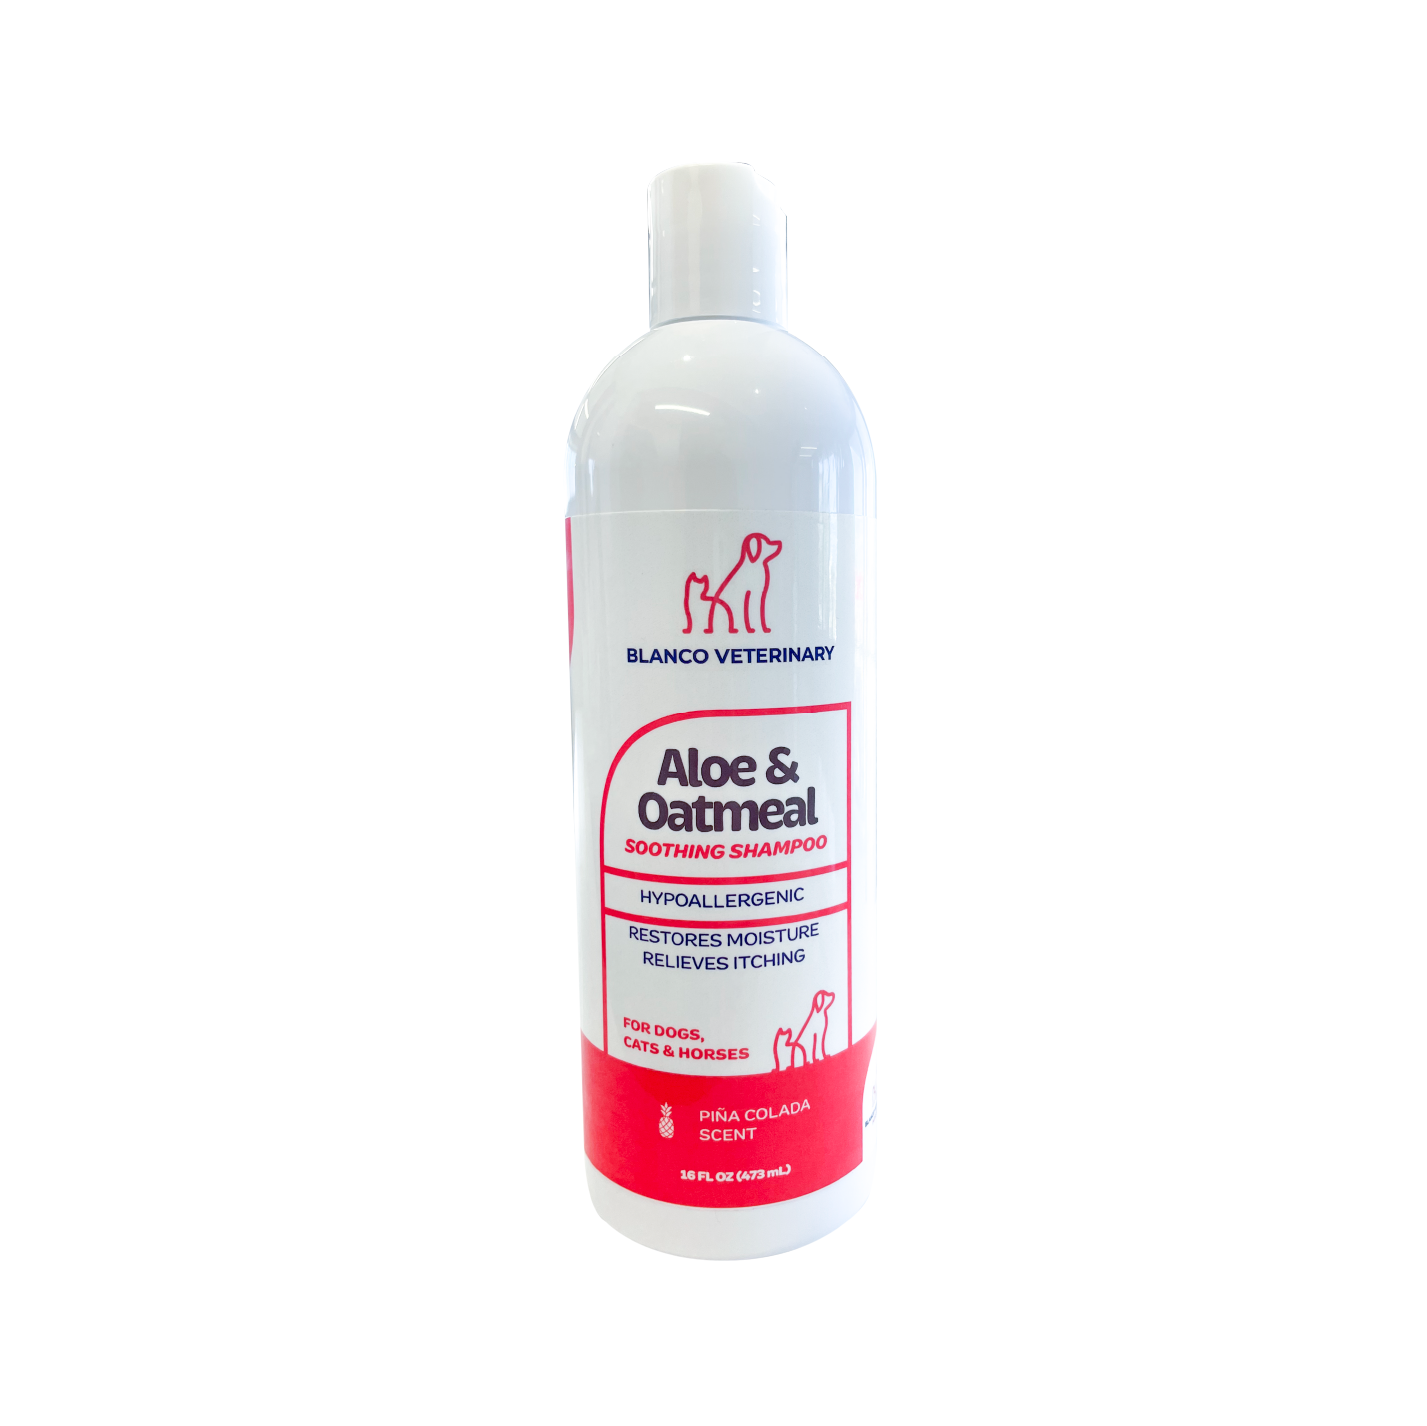 Blanco Veterinary Aloe & Oatmeal Soothing Shampoo 16oz